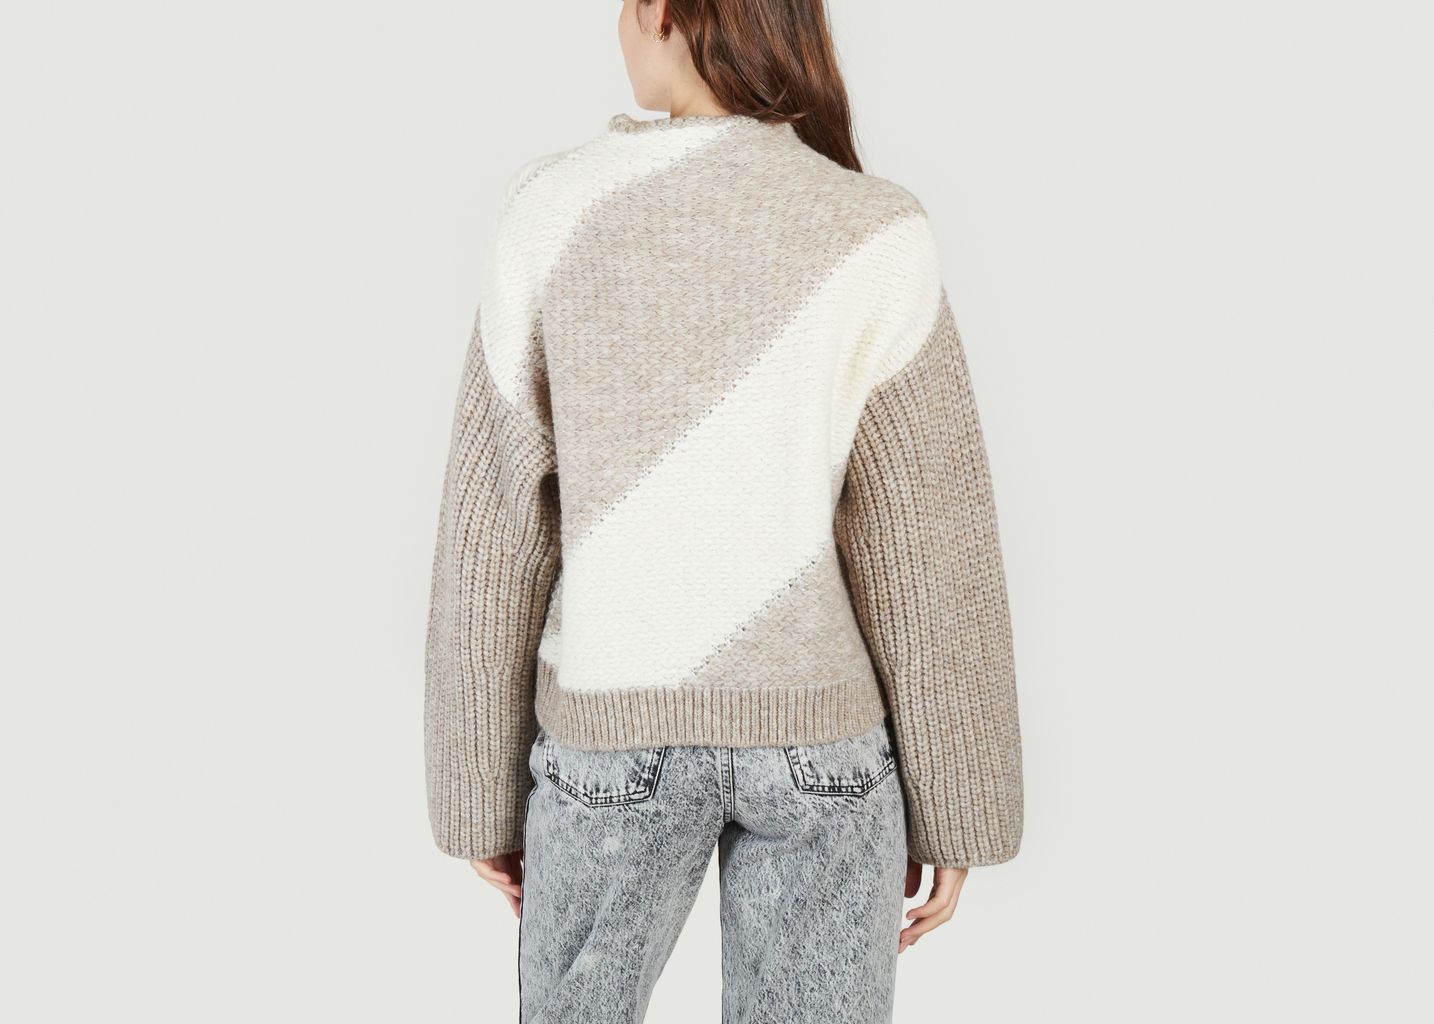 Arzel two-tone knitted sweater  - IRO